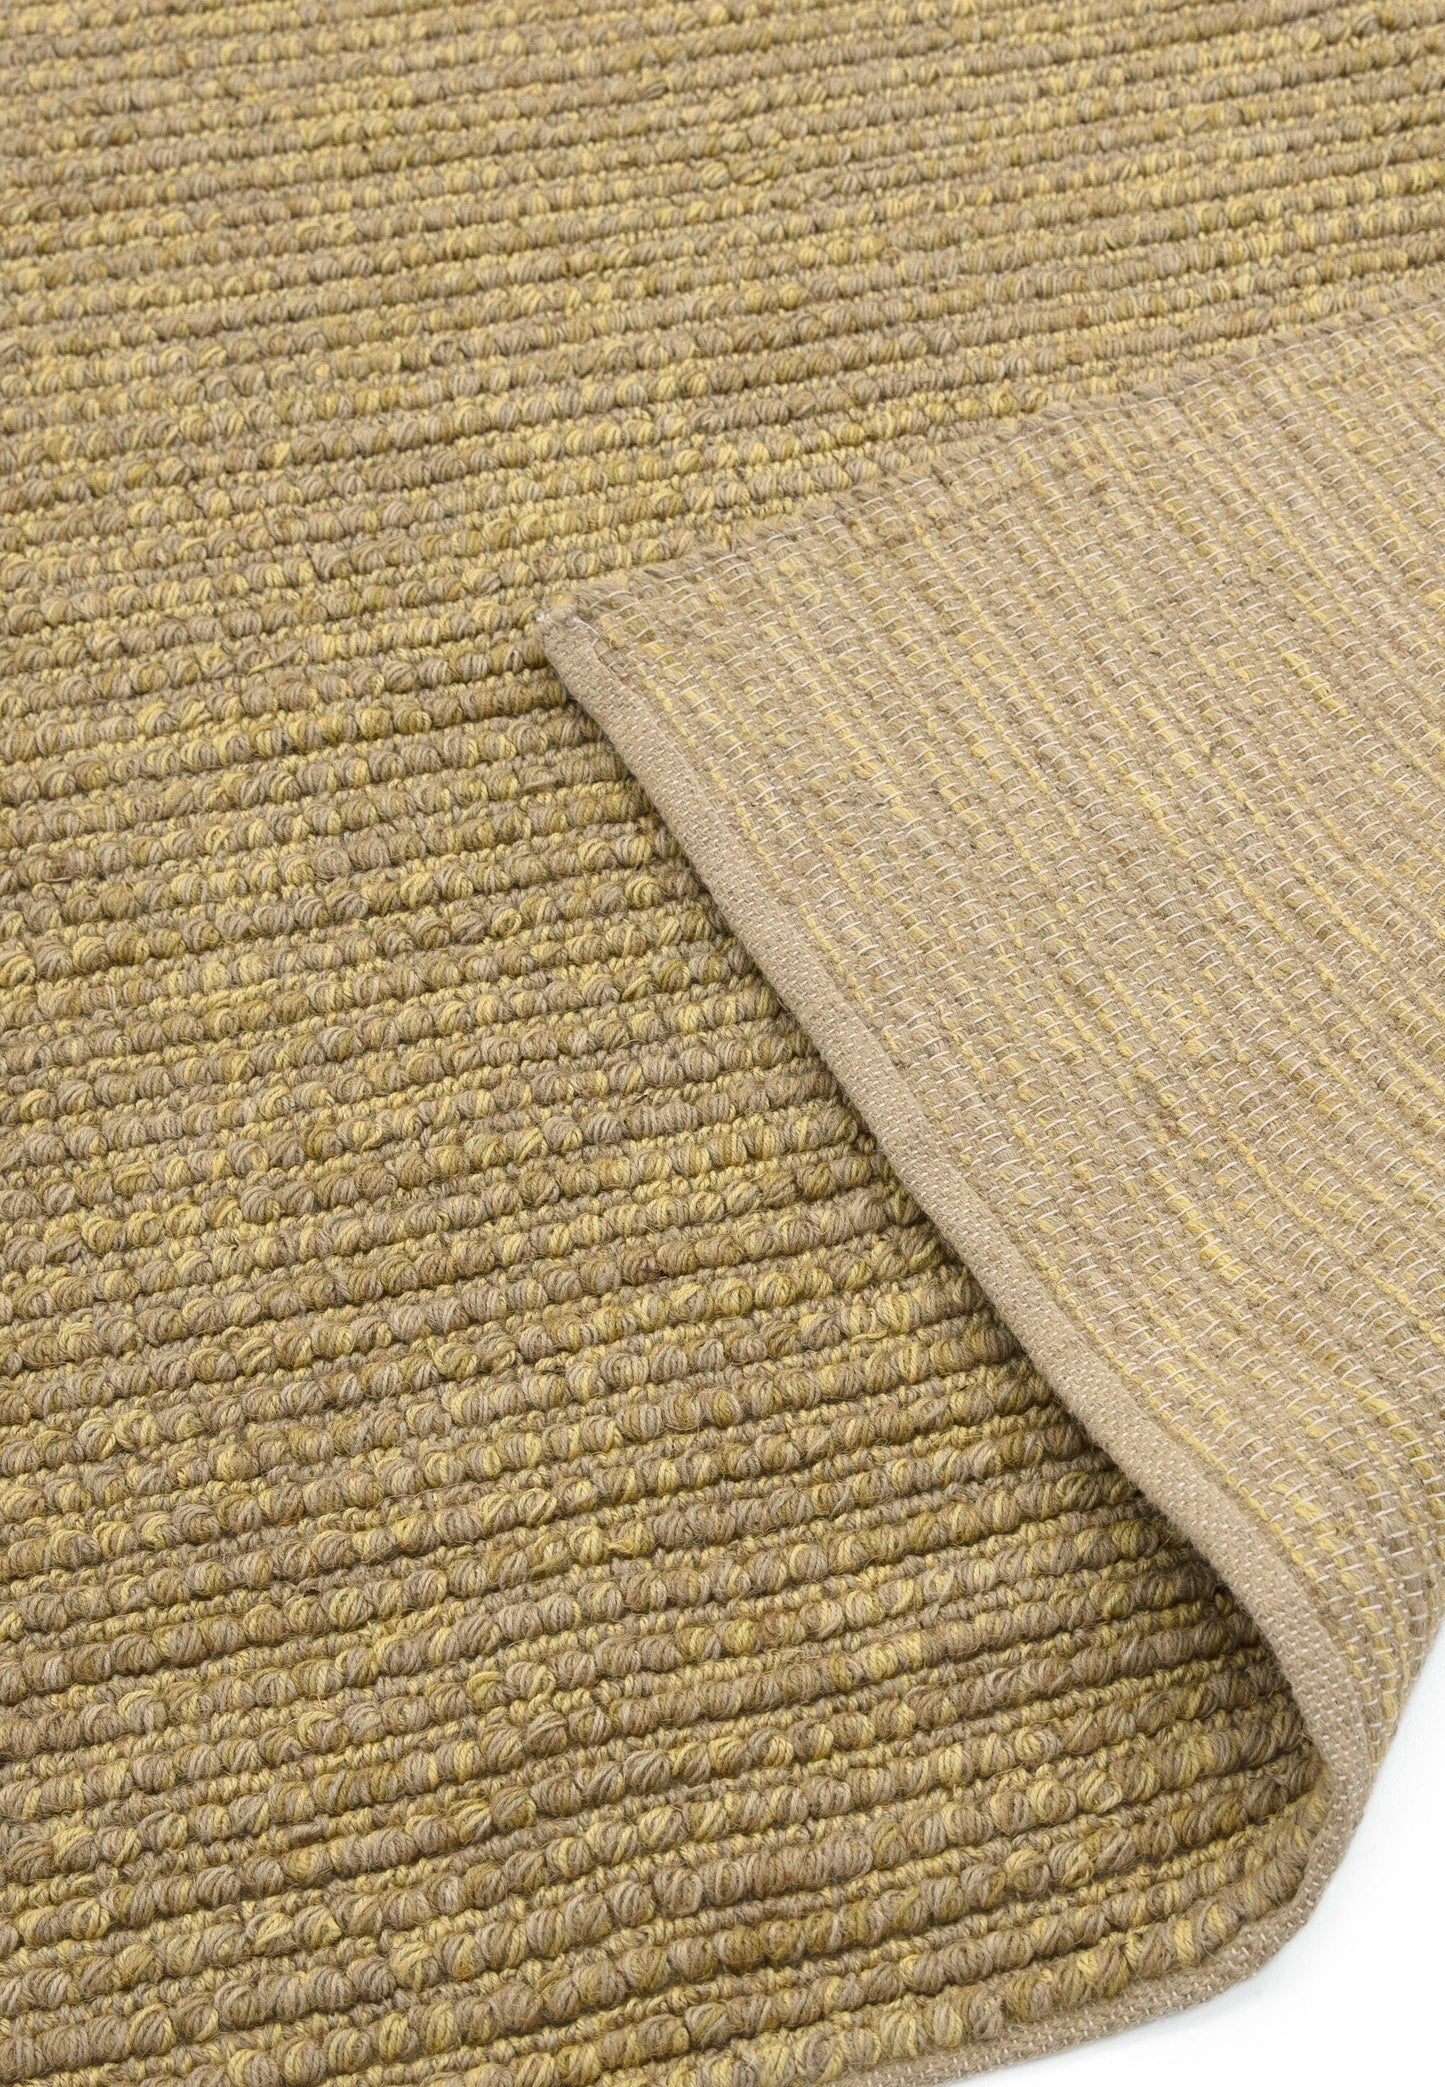 Asiatic Carpets Jute Loop Hand Woven Rug Natural - 120 x 180cm